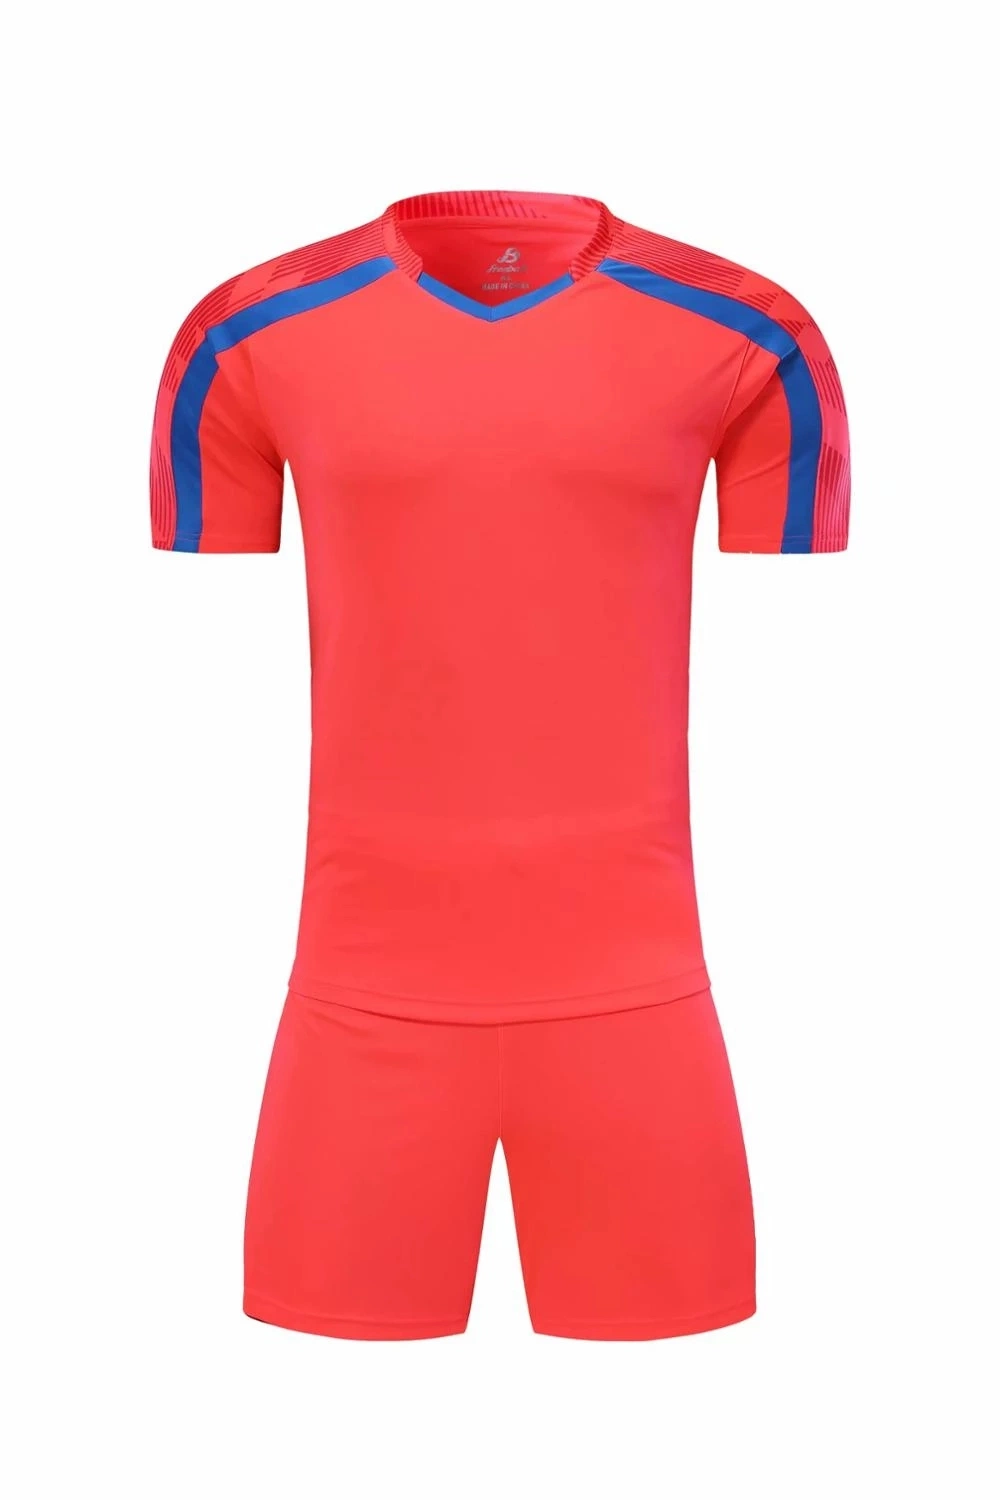 Men Short Sleeve Red Soccer Jersey Set Green Football Uniform Blue Kids Soccer Shirt Customized Name Number